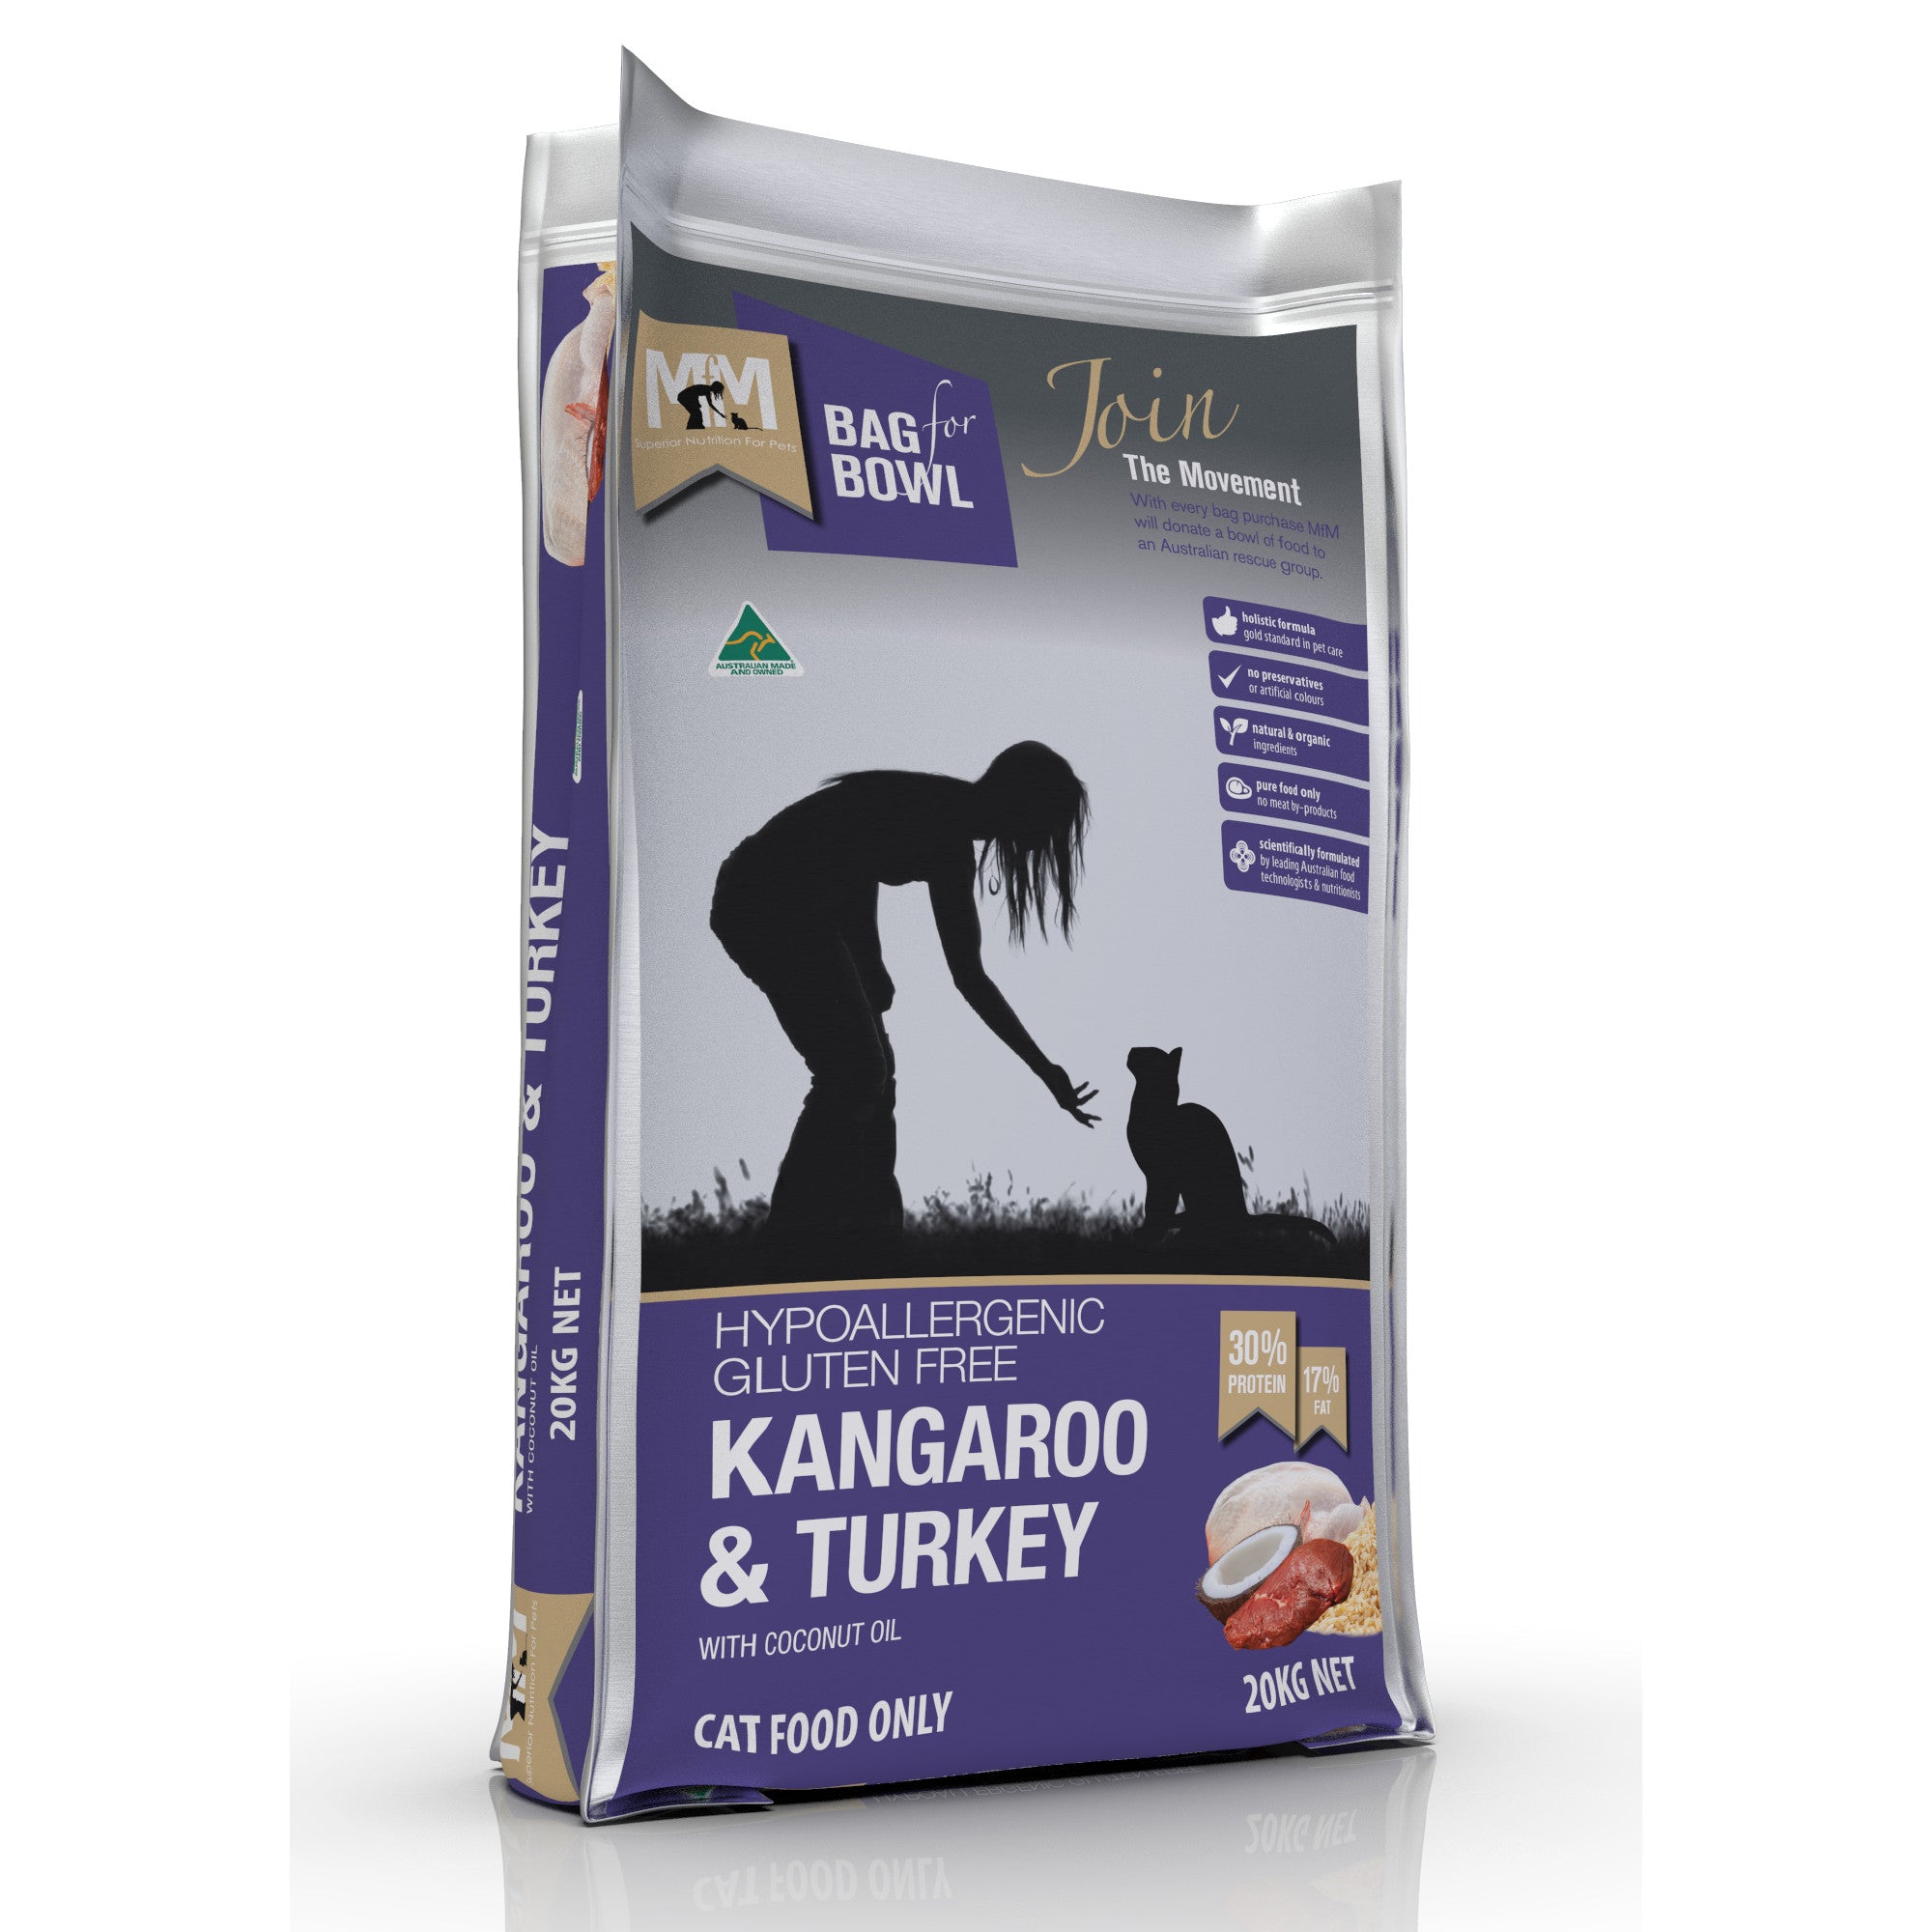 Meals for Meows Kangaroo & Turkey Dry Cat Food 20kg.